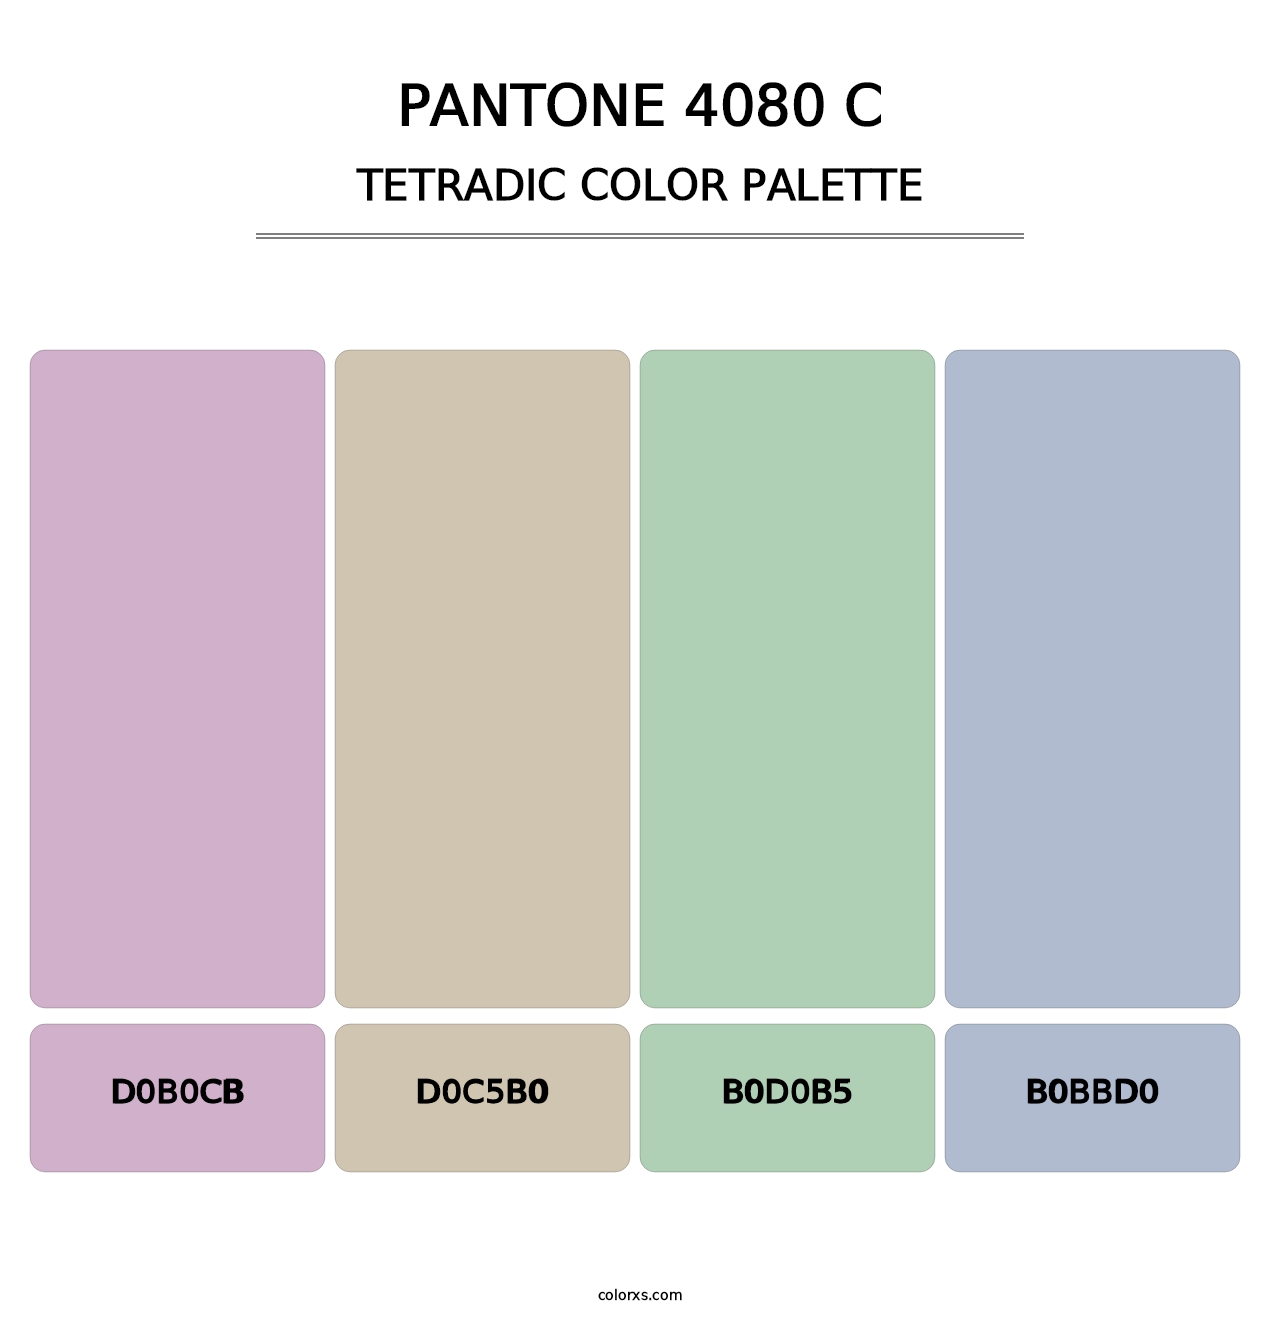 PANTONE 4080 C - Tetradic Color Palette